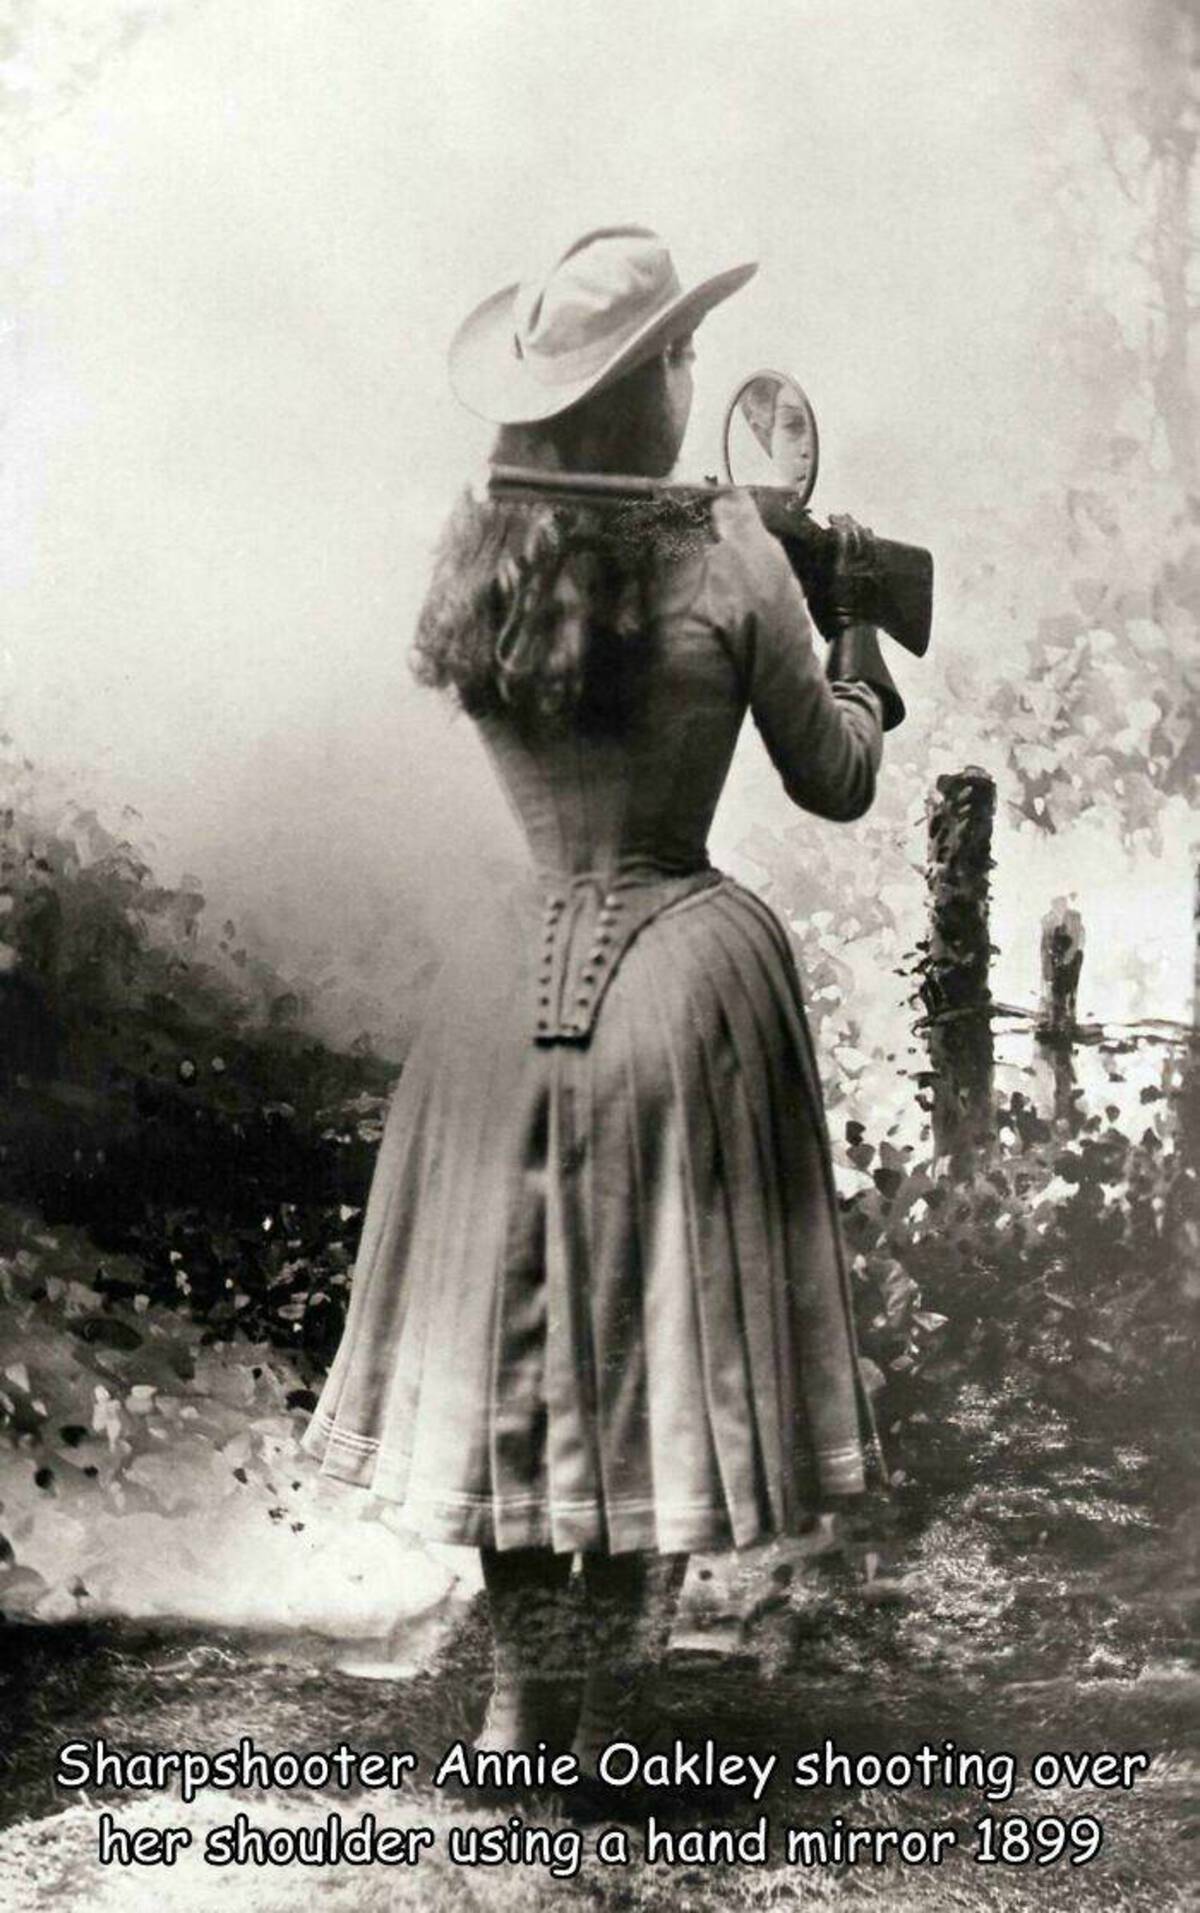 annie oakley - Sharpshooter Annie Oakley shooting over her shoulder using a hand mirror 1899